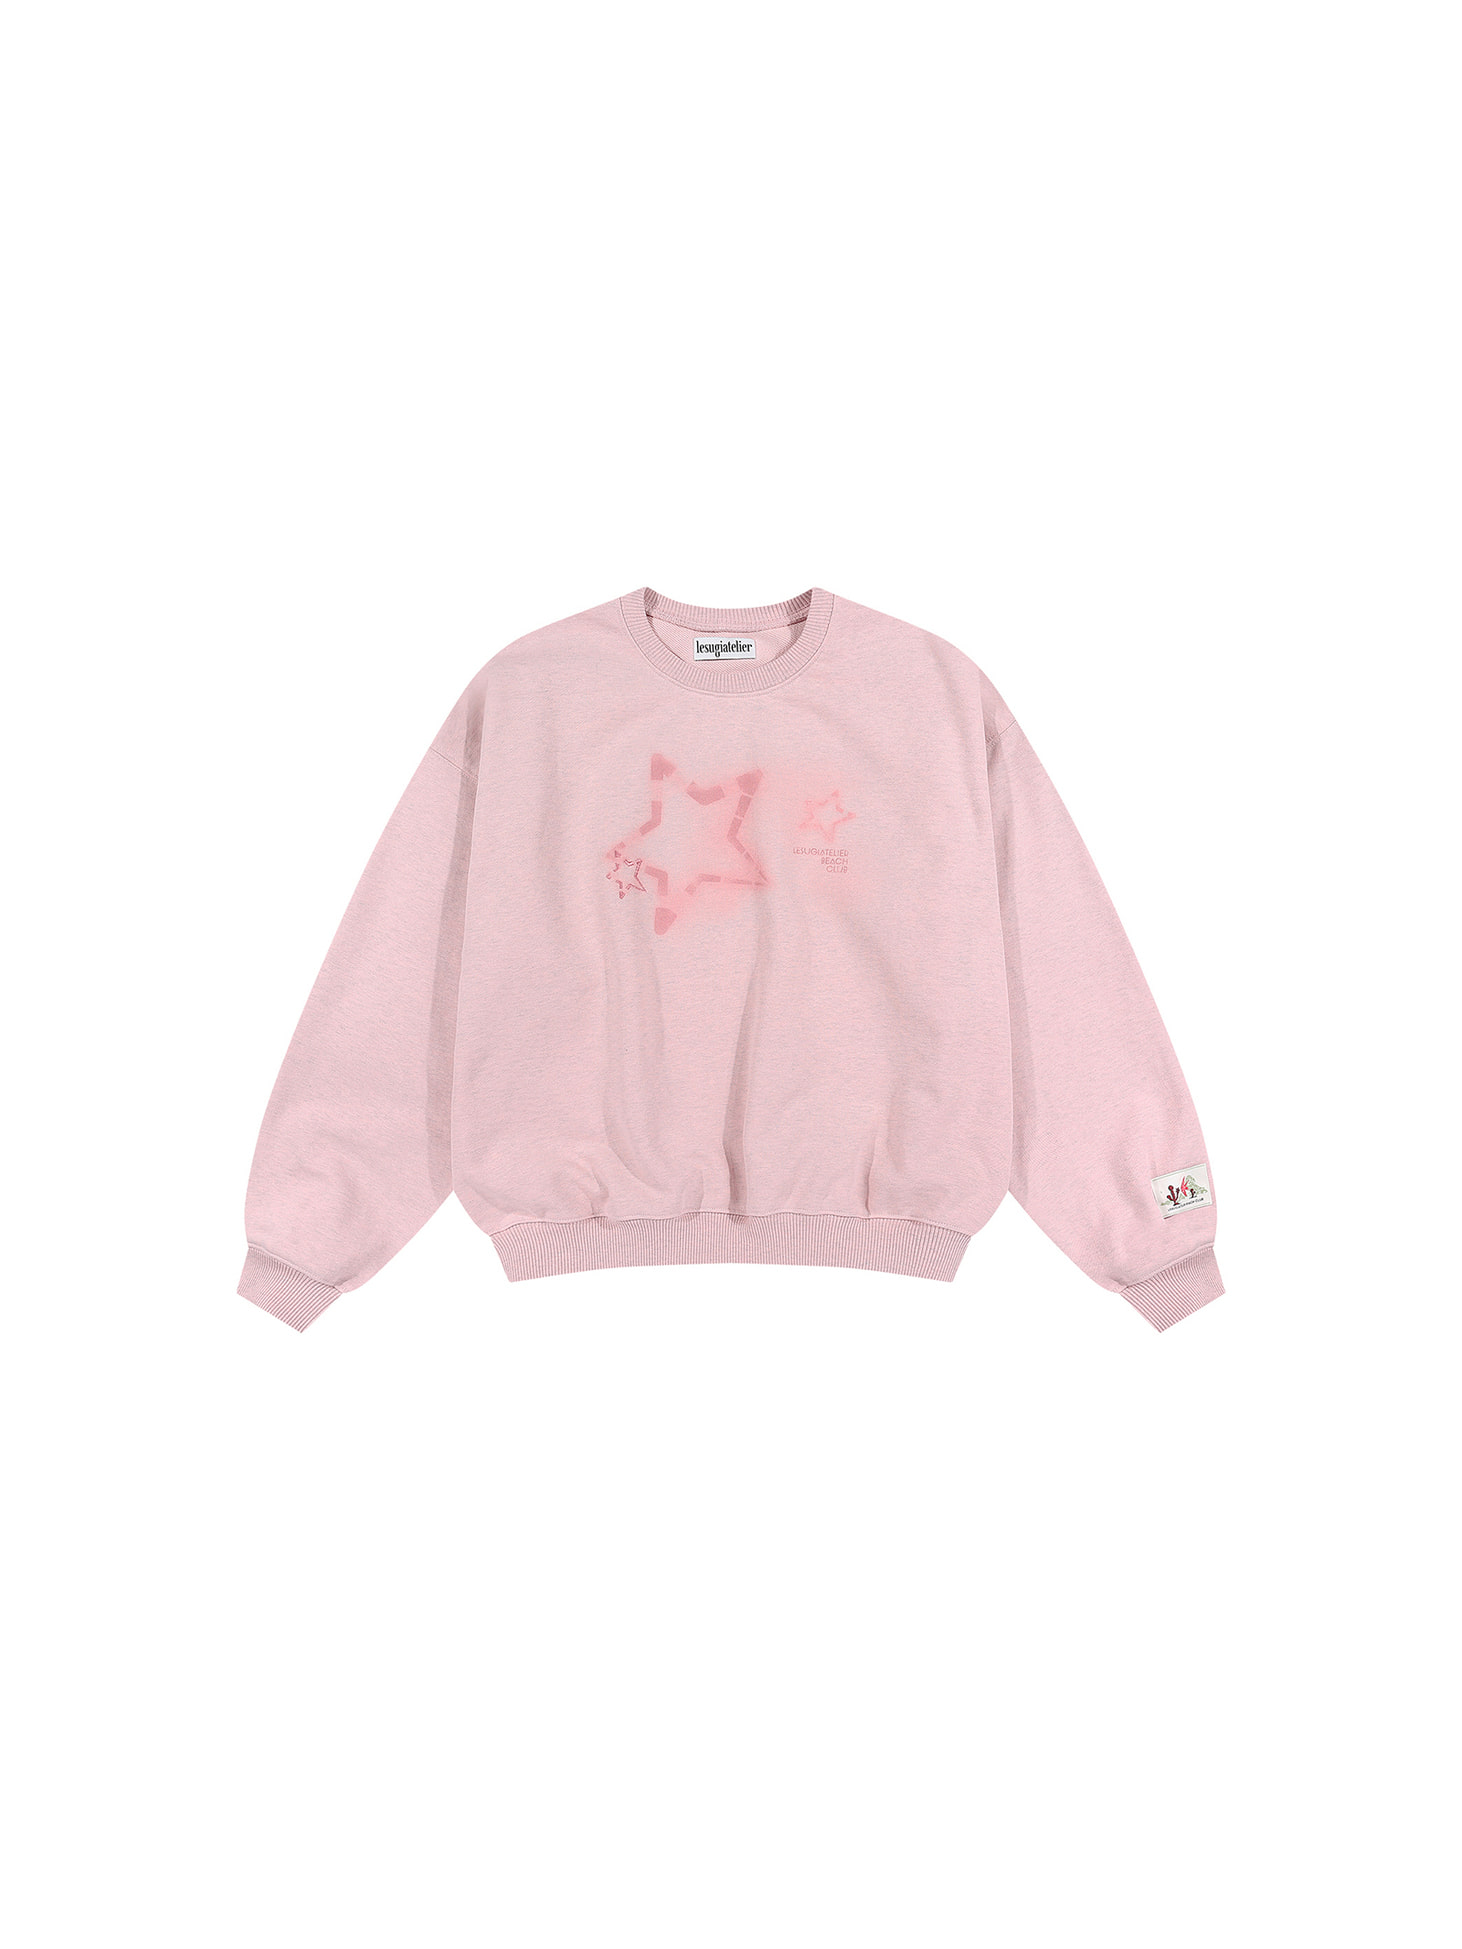 Sugi star sweatshirt / Pink